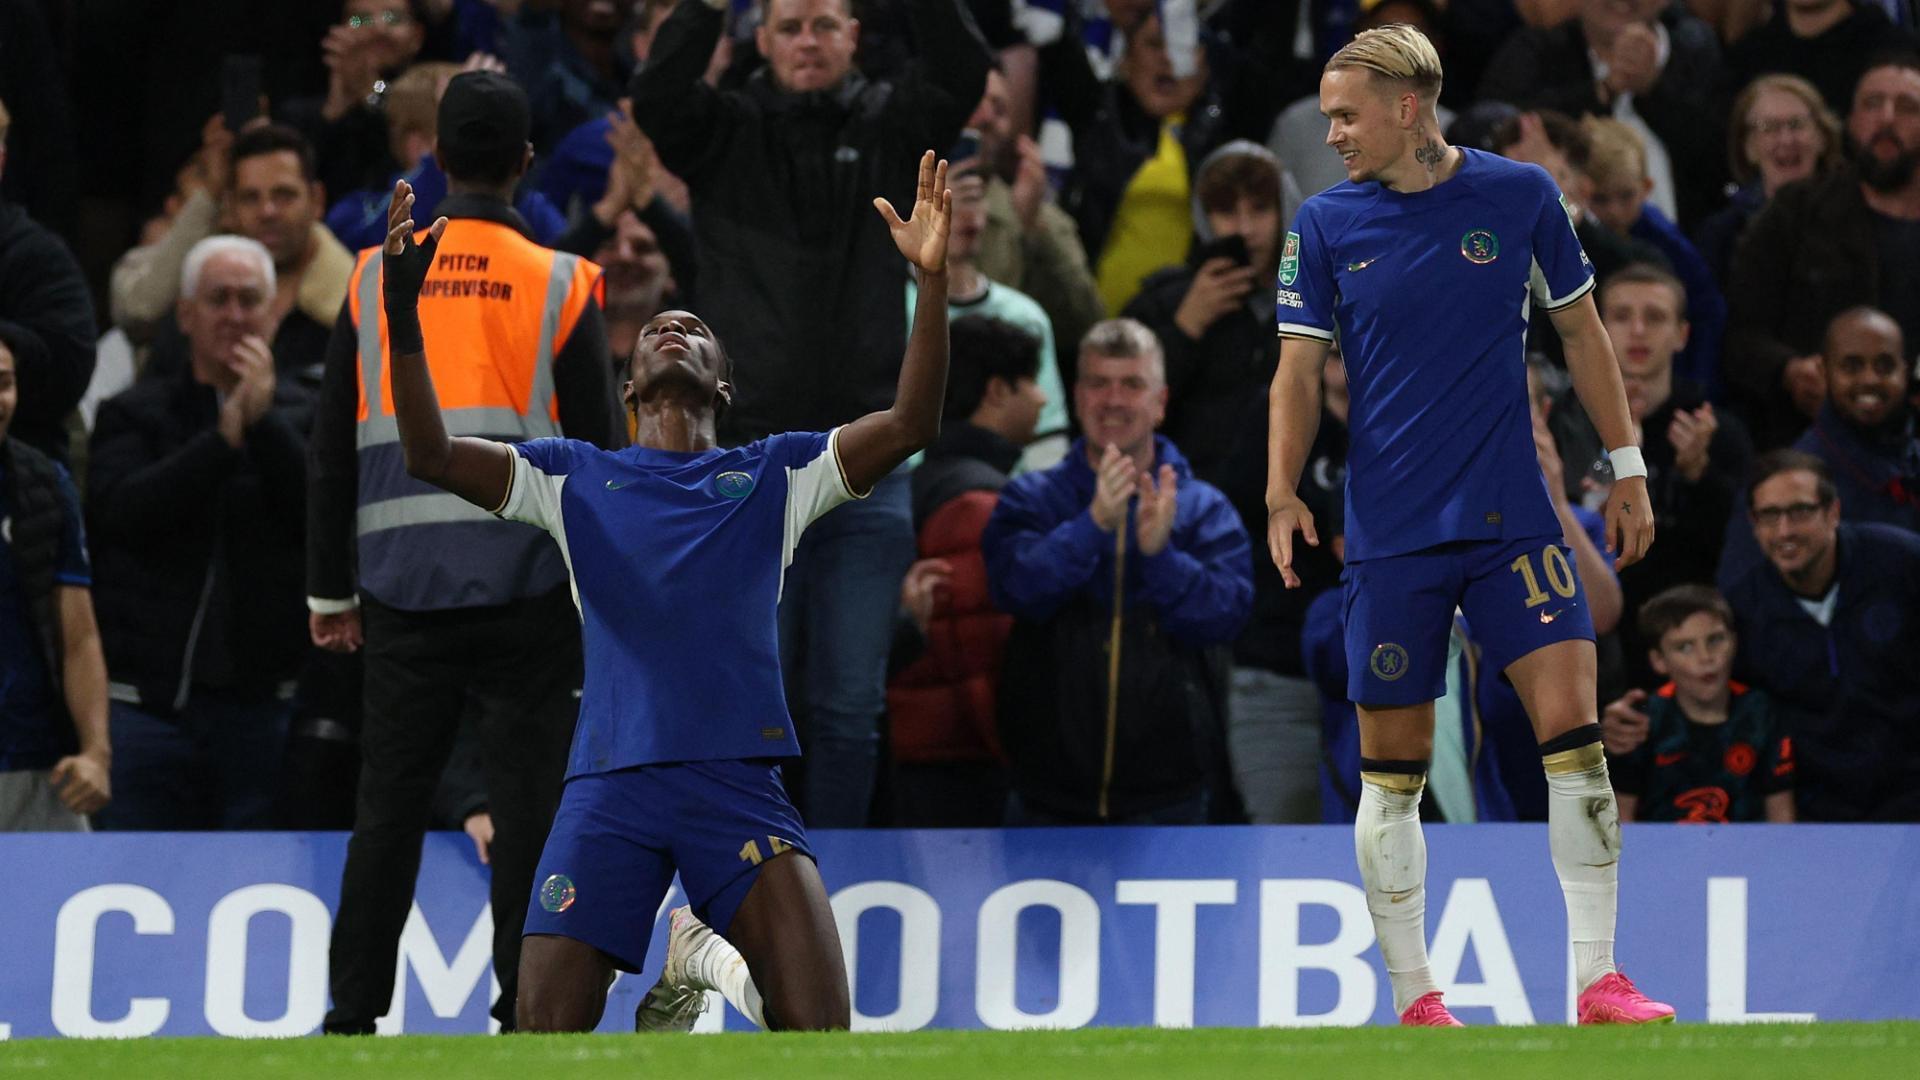 Peter Sees Chelsea v. Brighton in EFL Cup @Stamford Bridge (London